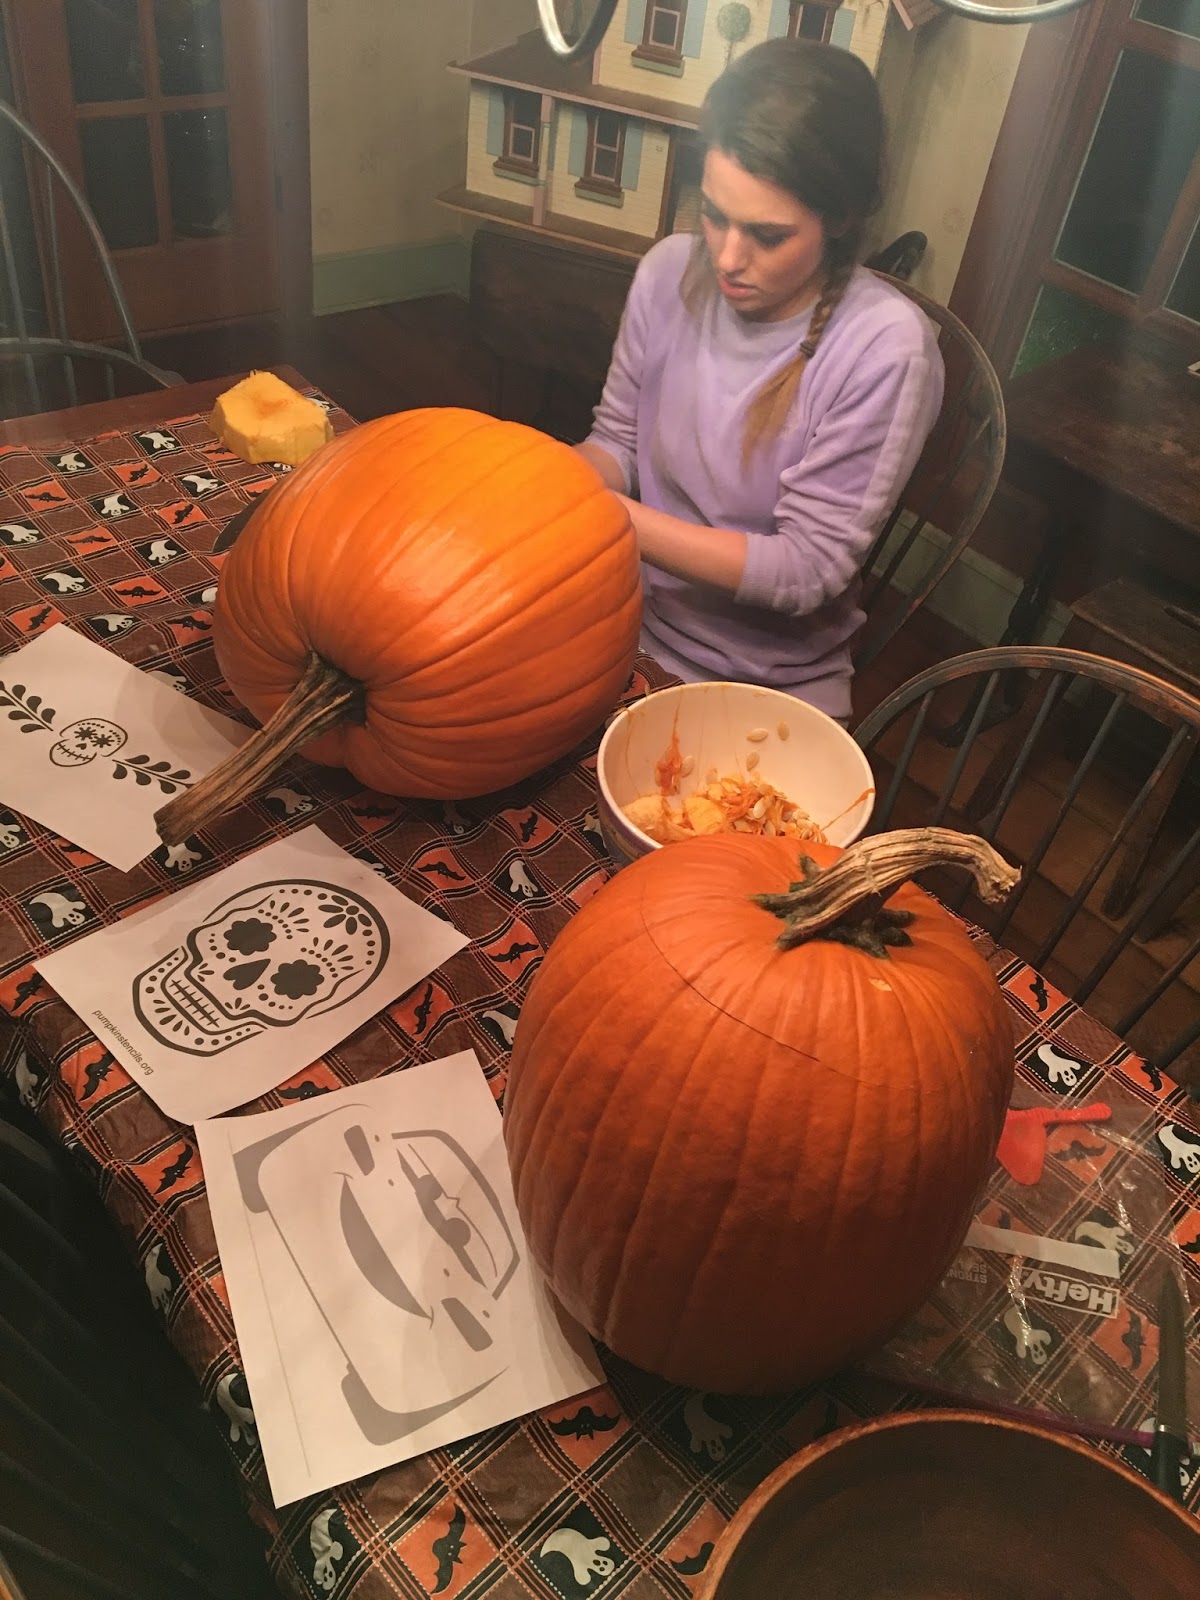 disney pixar themed pumpkin carving